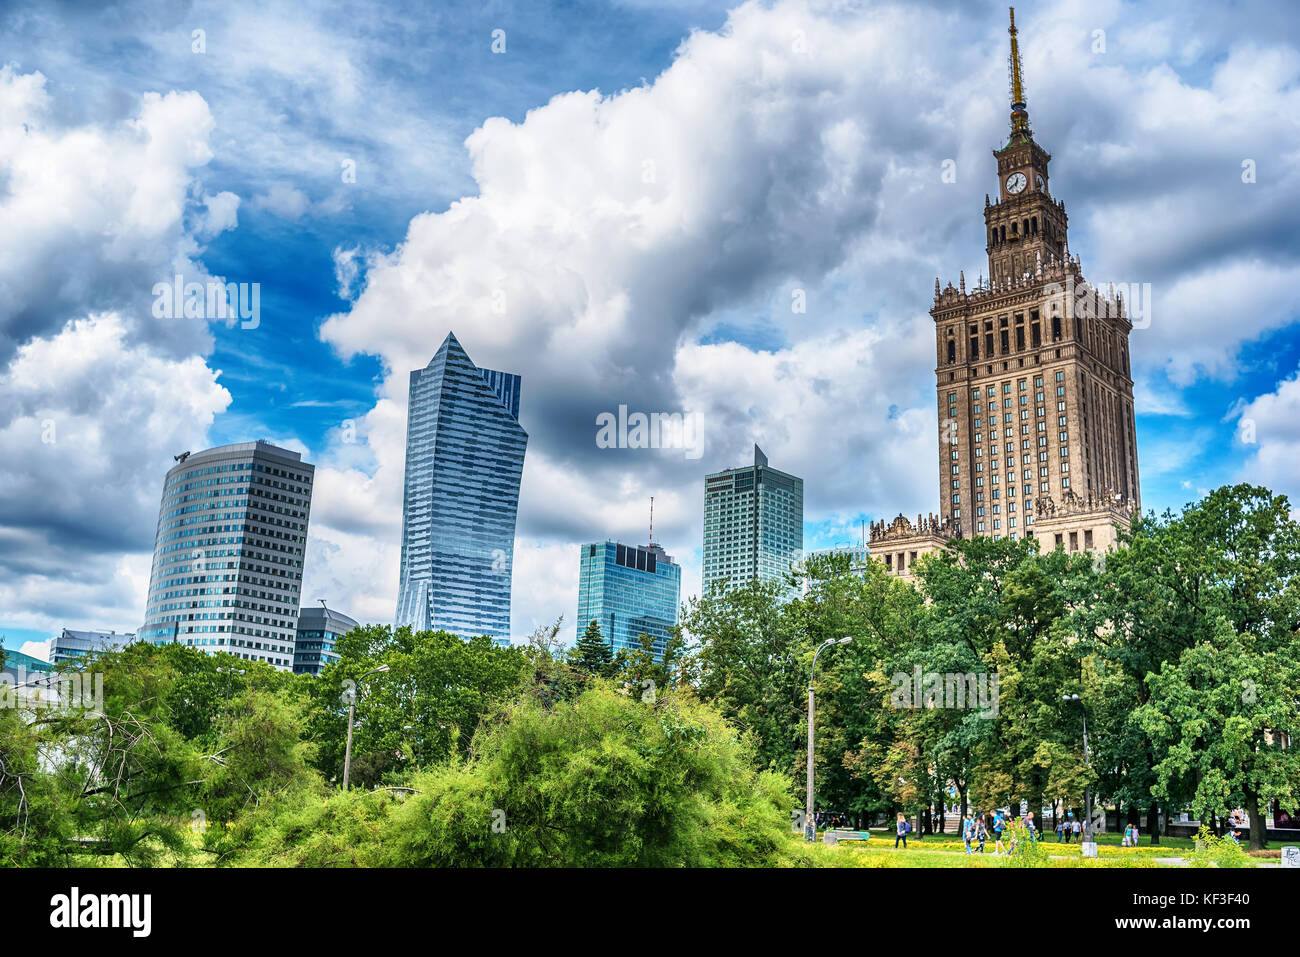 Warsaw, Poland: the Palace of Culture and Science, Polish Palac Kultury i Nauki Stock Photo